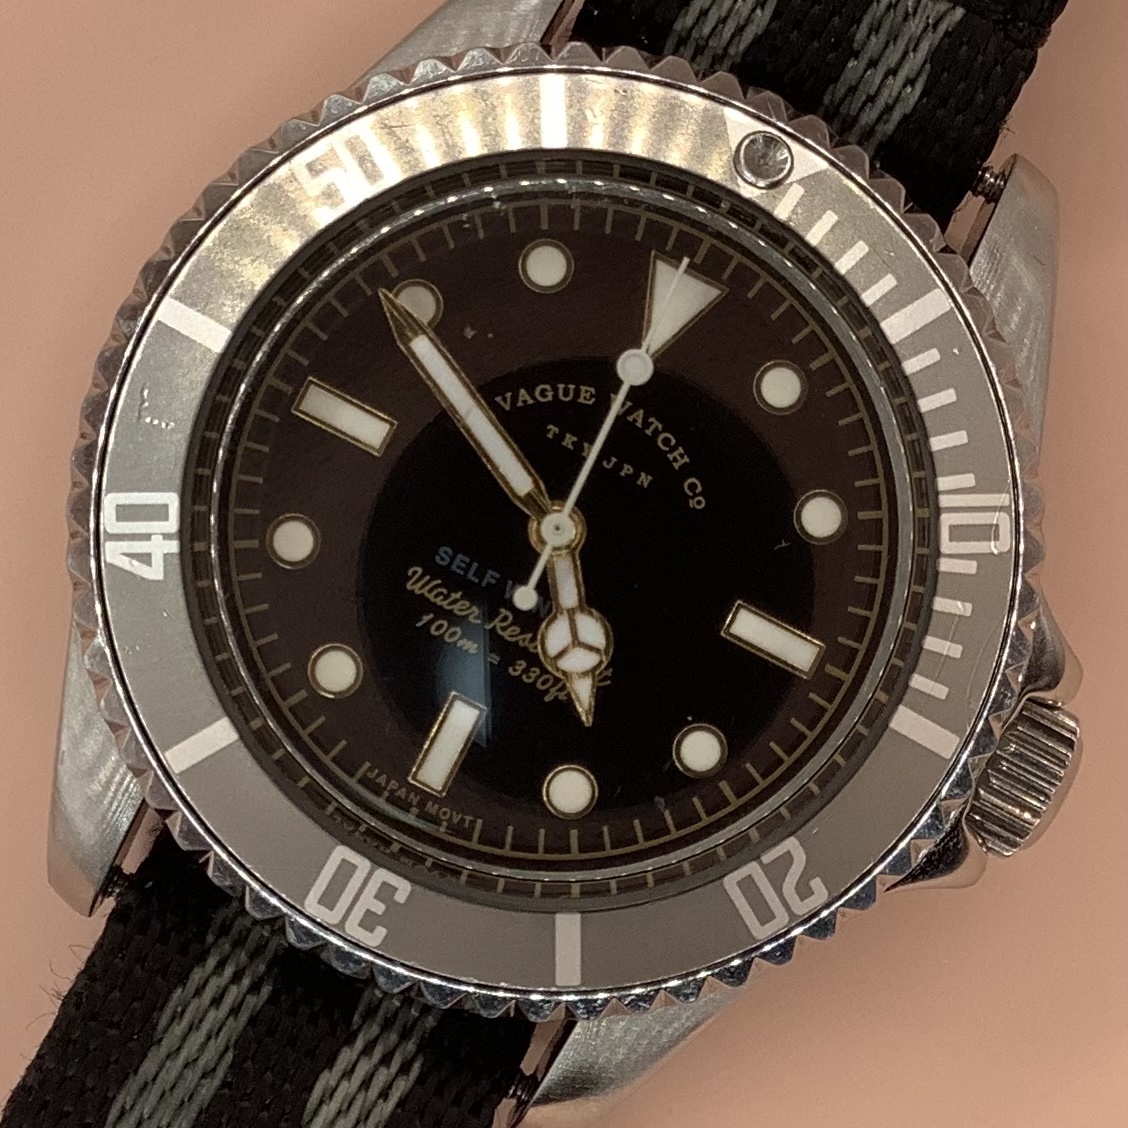 低価格安 VAGUE WATCH Co. 腕時計 GRY FAD自動巻き GF-L-001の通販 by